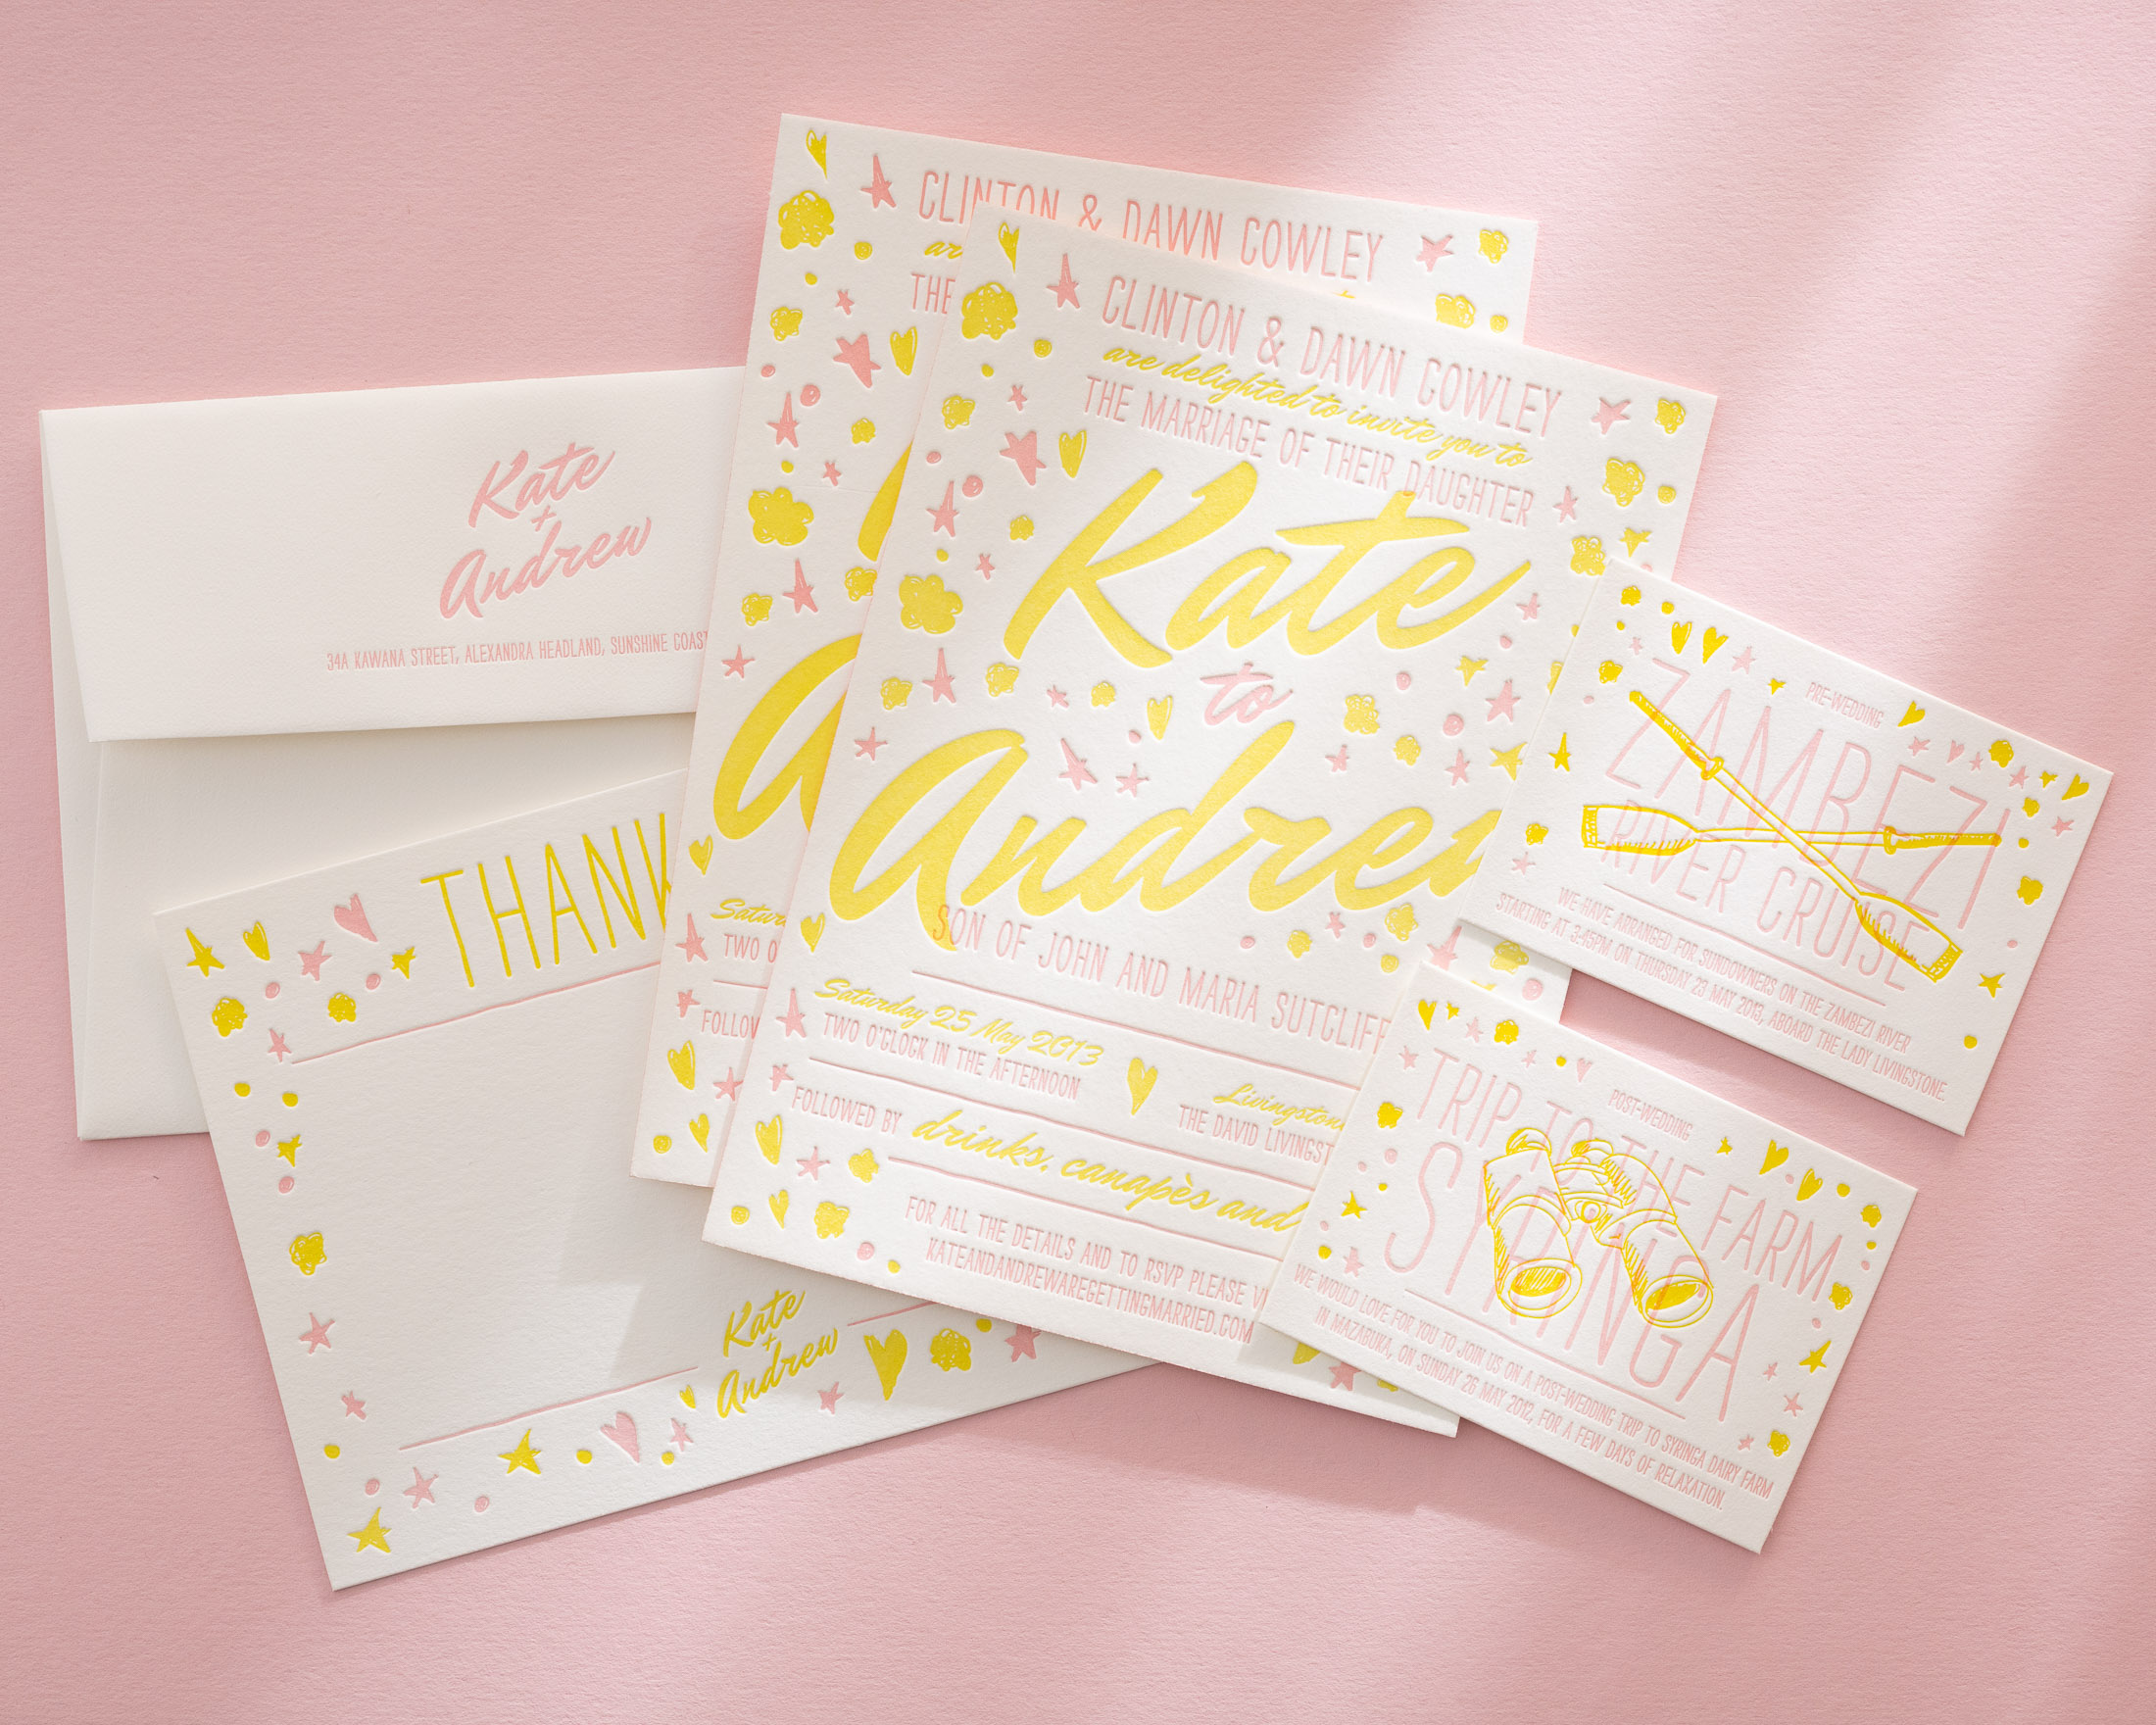 Kate-Andrew-Wedding-Invitations-1